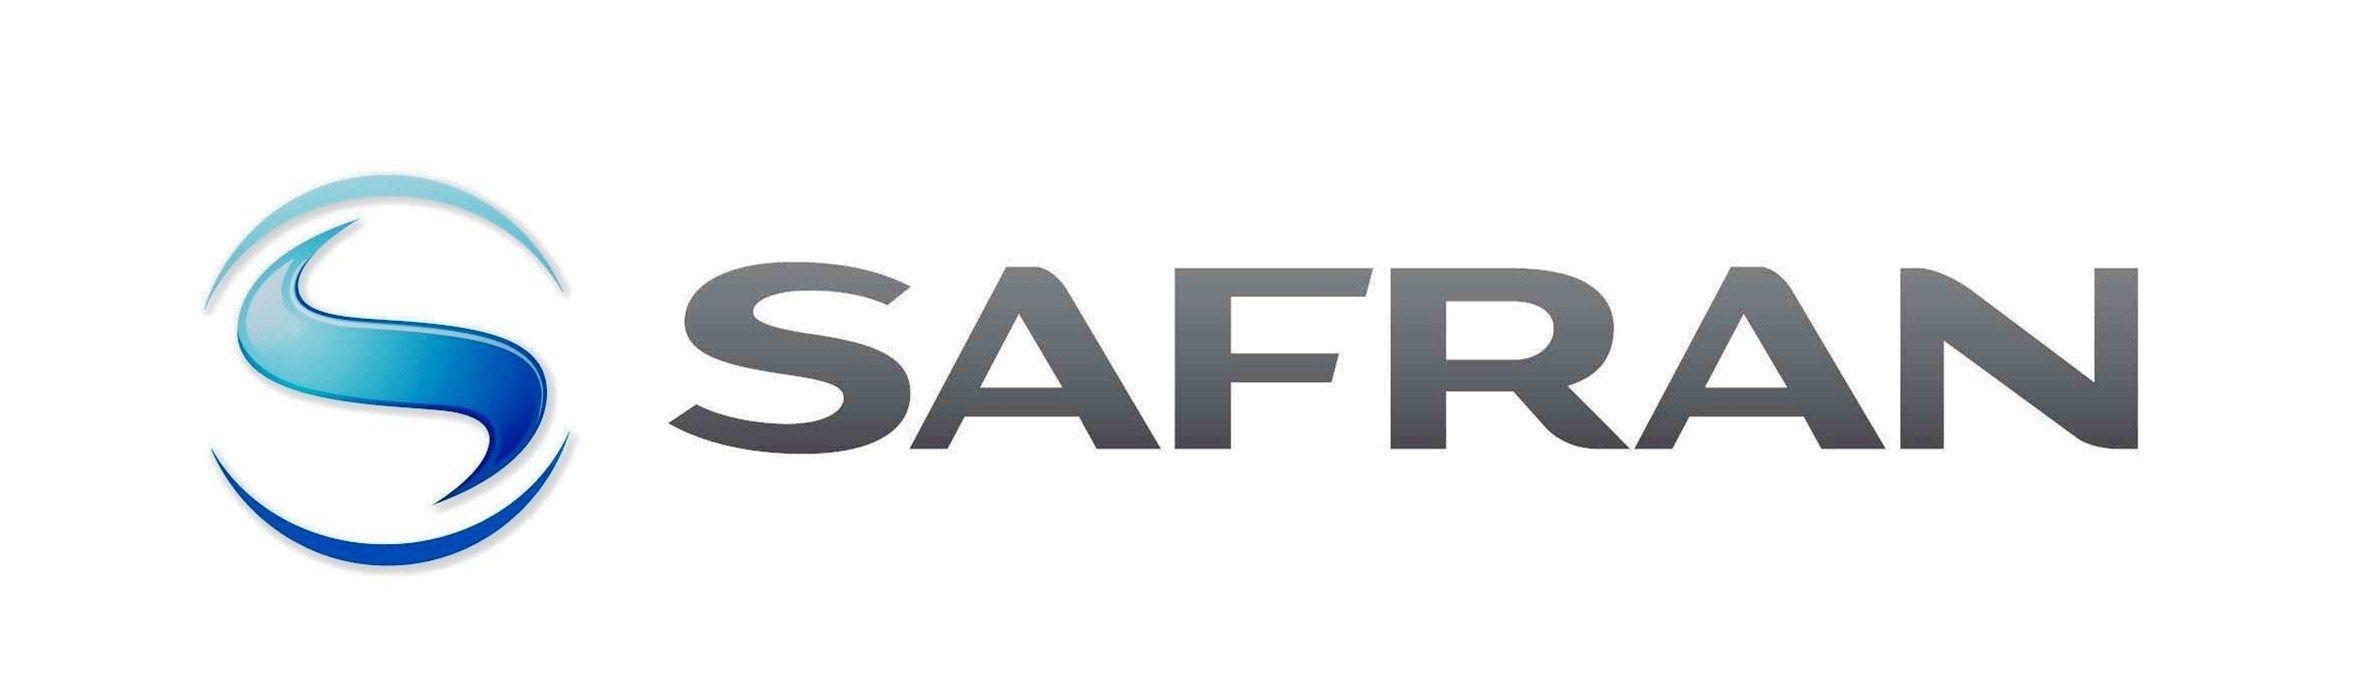 Safran Logo - Safran Logo Security 1st